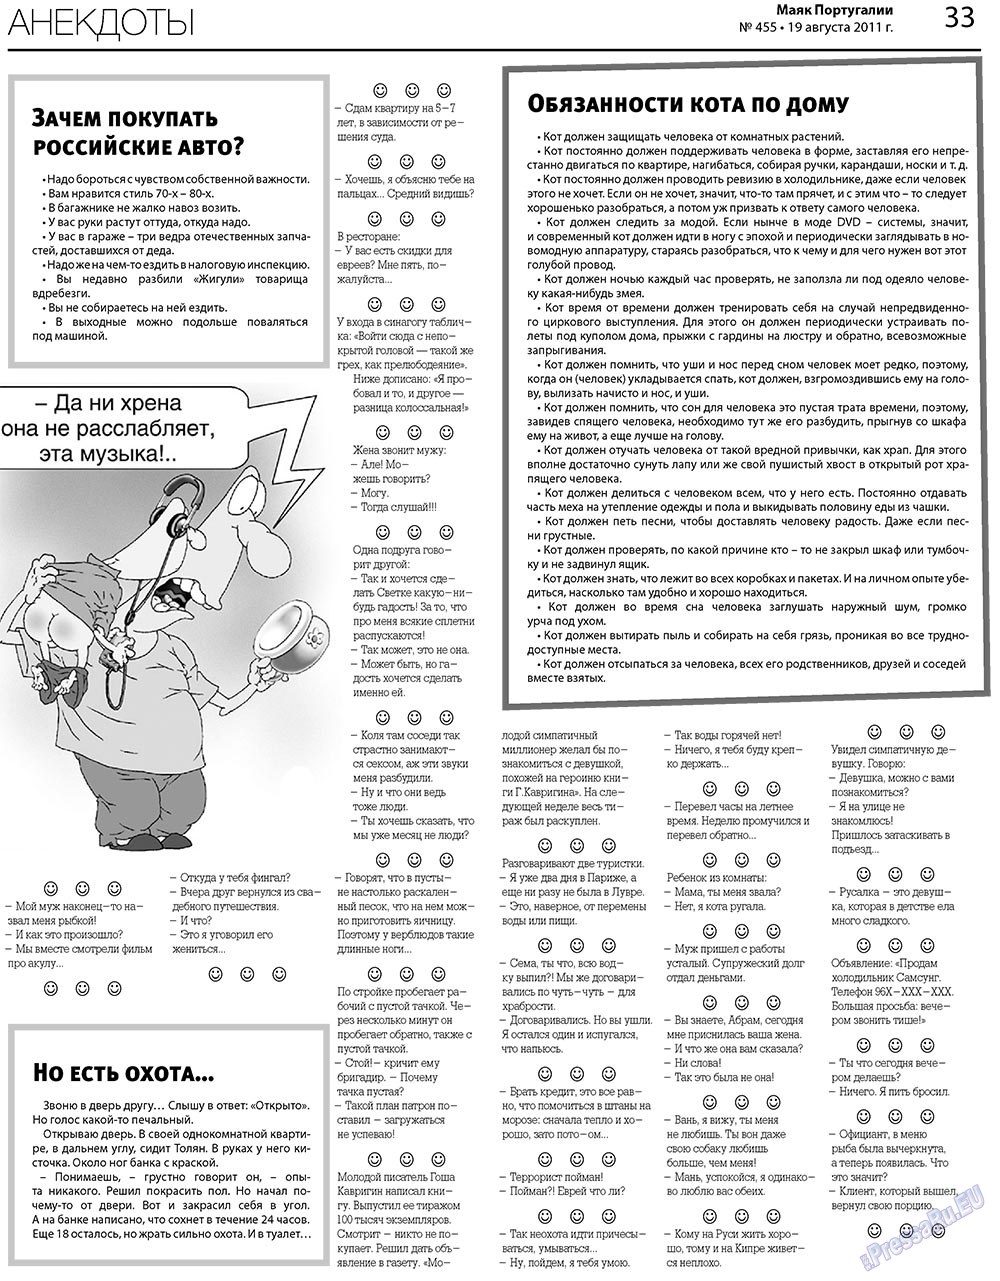 Маяк Португалии, газета. 2011 №455 стр.33